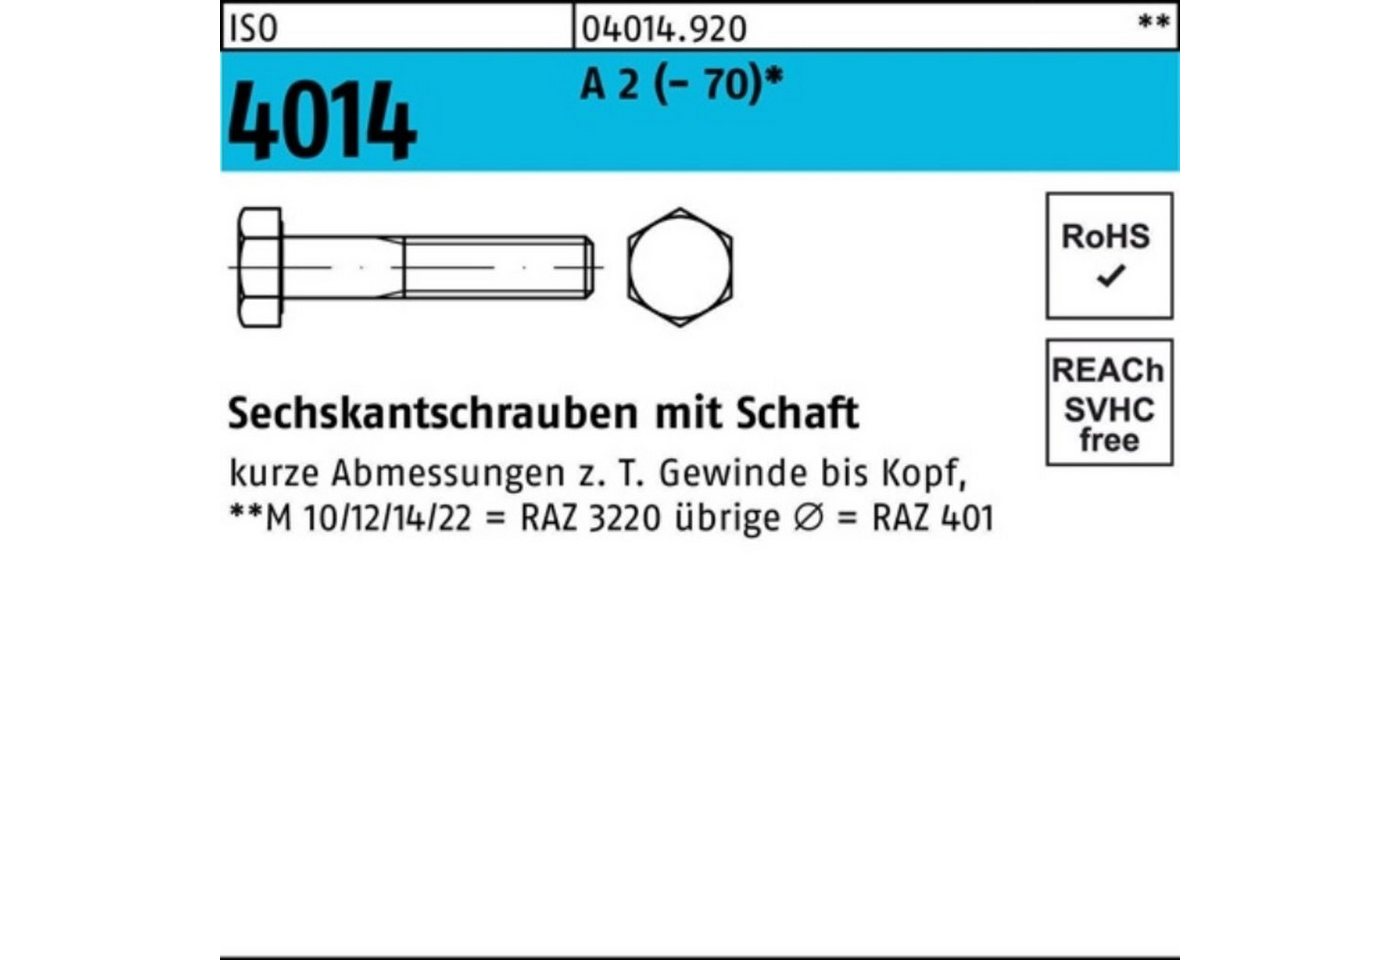 Bufab Sechskantschraube 100er Pack Sechskantschraube ISO 4014 Schaft M24x 90 A 2 (70) 1 Stü von Bufab